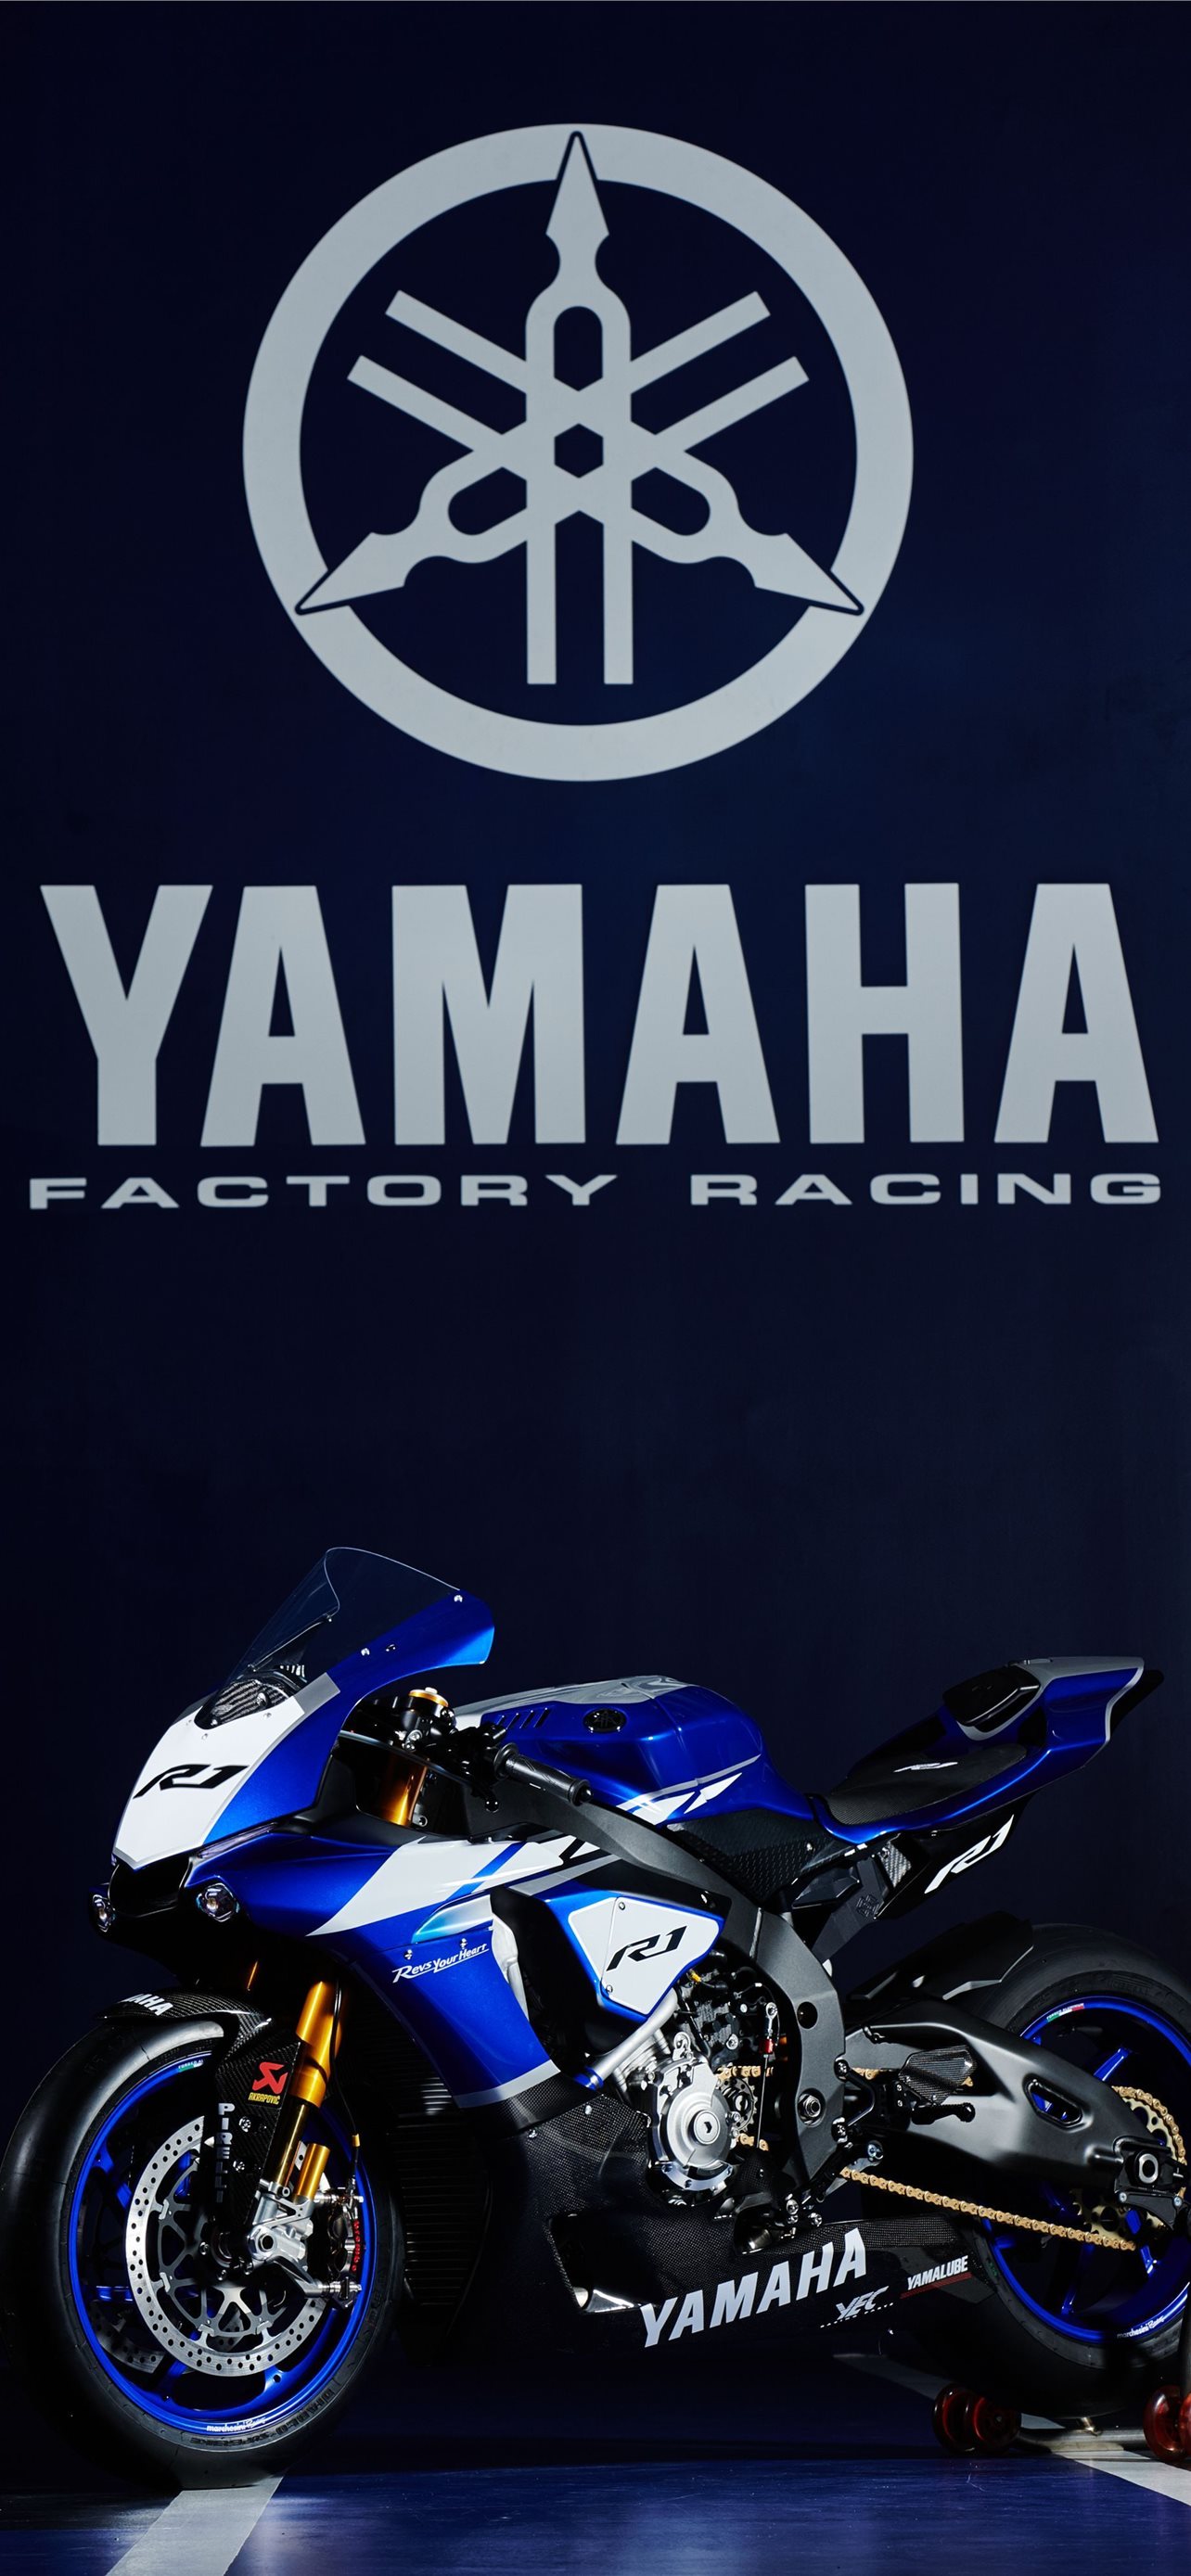 Yamaha Wallpapers - Top 25 Best Yamaha Wallpapers Download